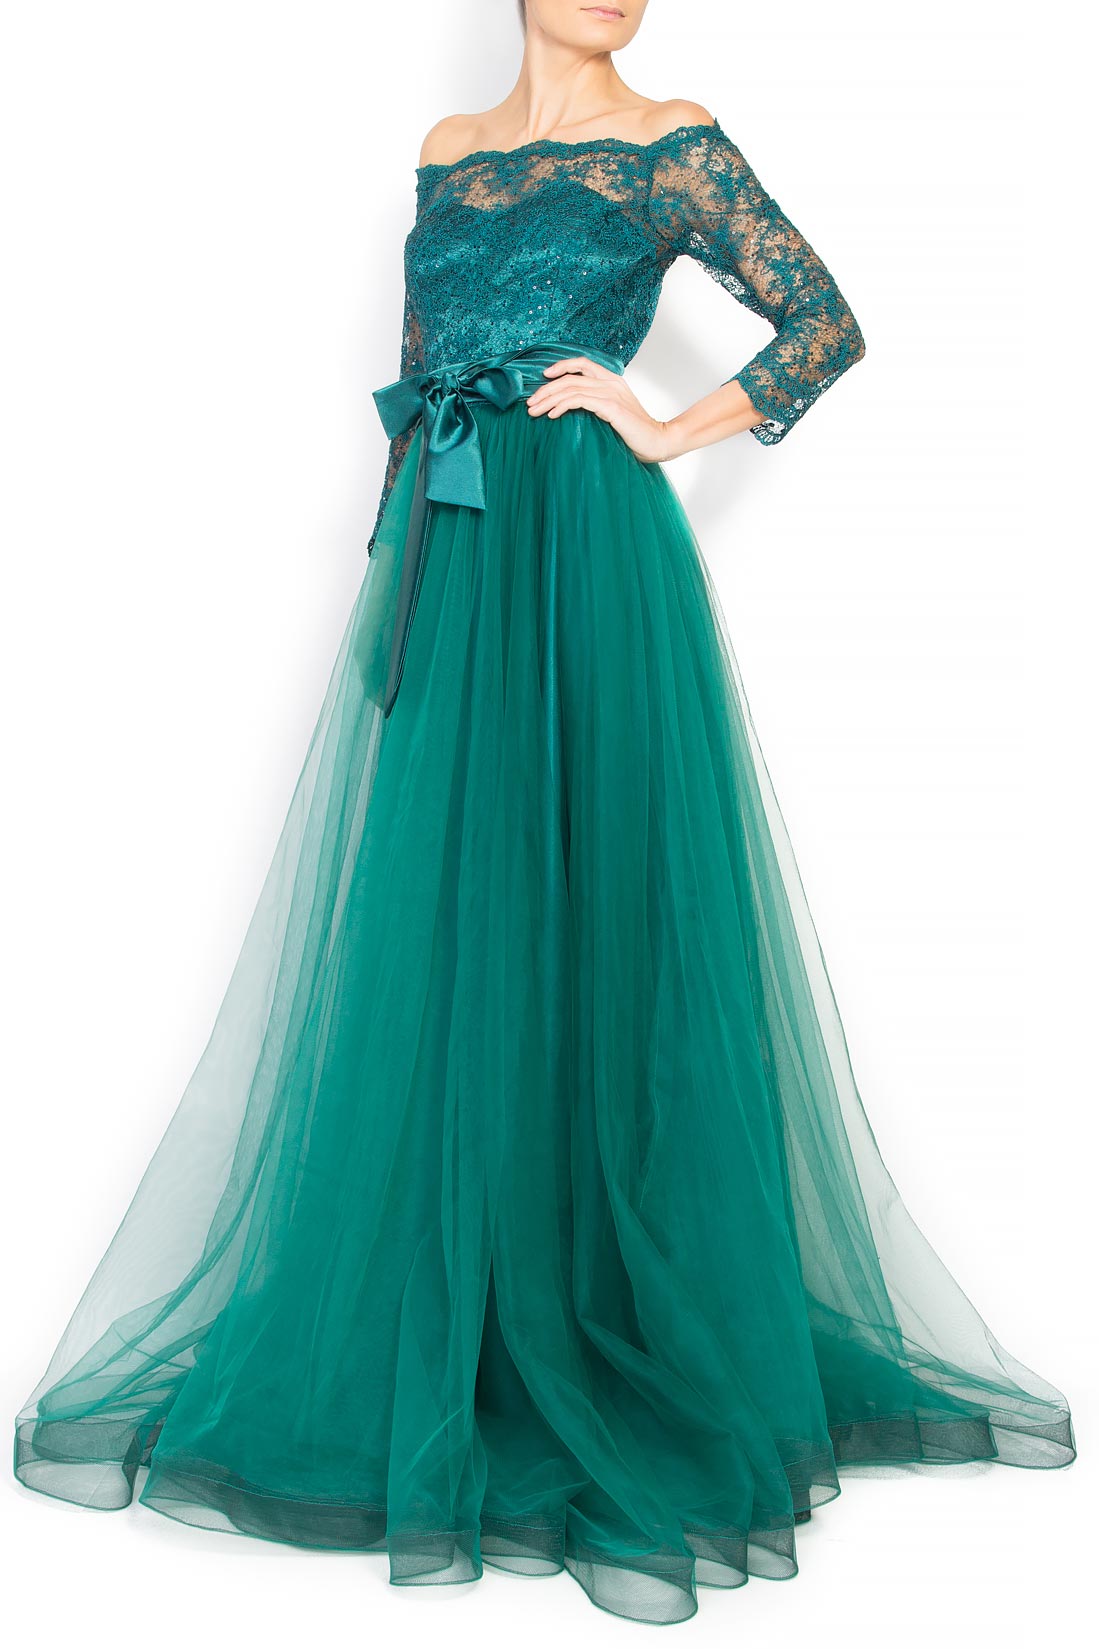 Lace and tulle gown Raffaela Moraru image 1